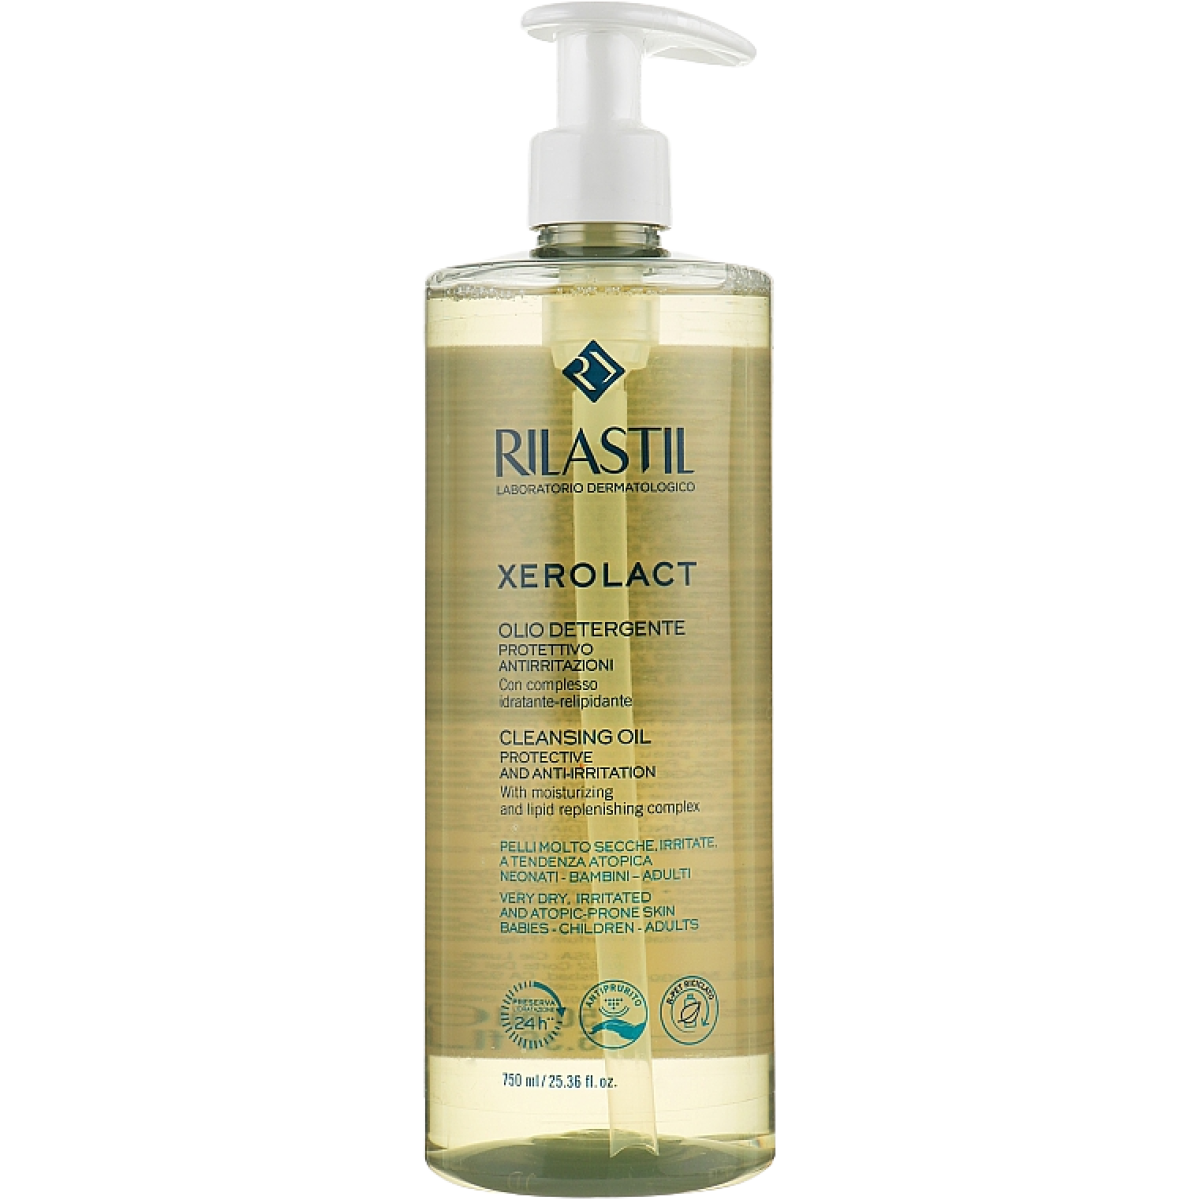 Rilastil Xerolact Cleansing Oil 750 ml, Face & Body Cleasing Oil, 21023